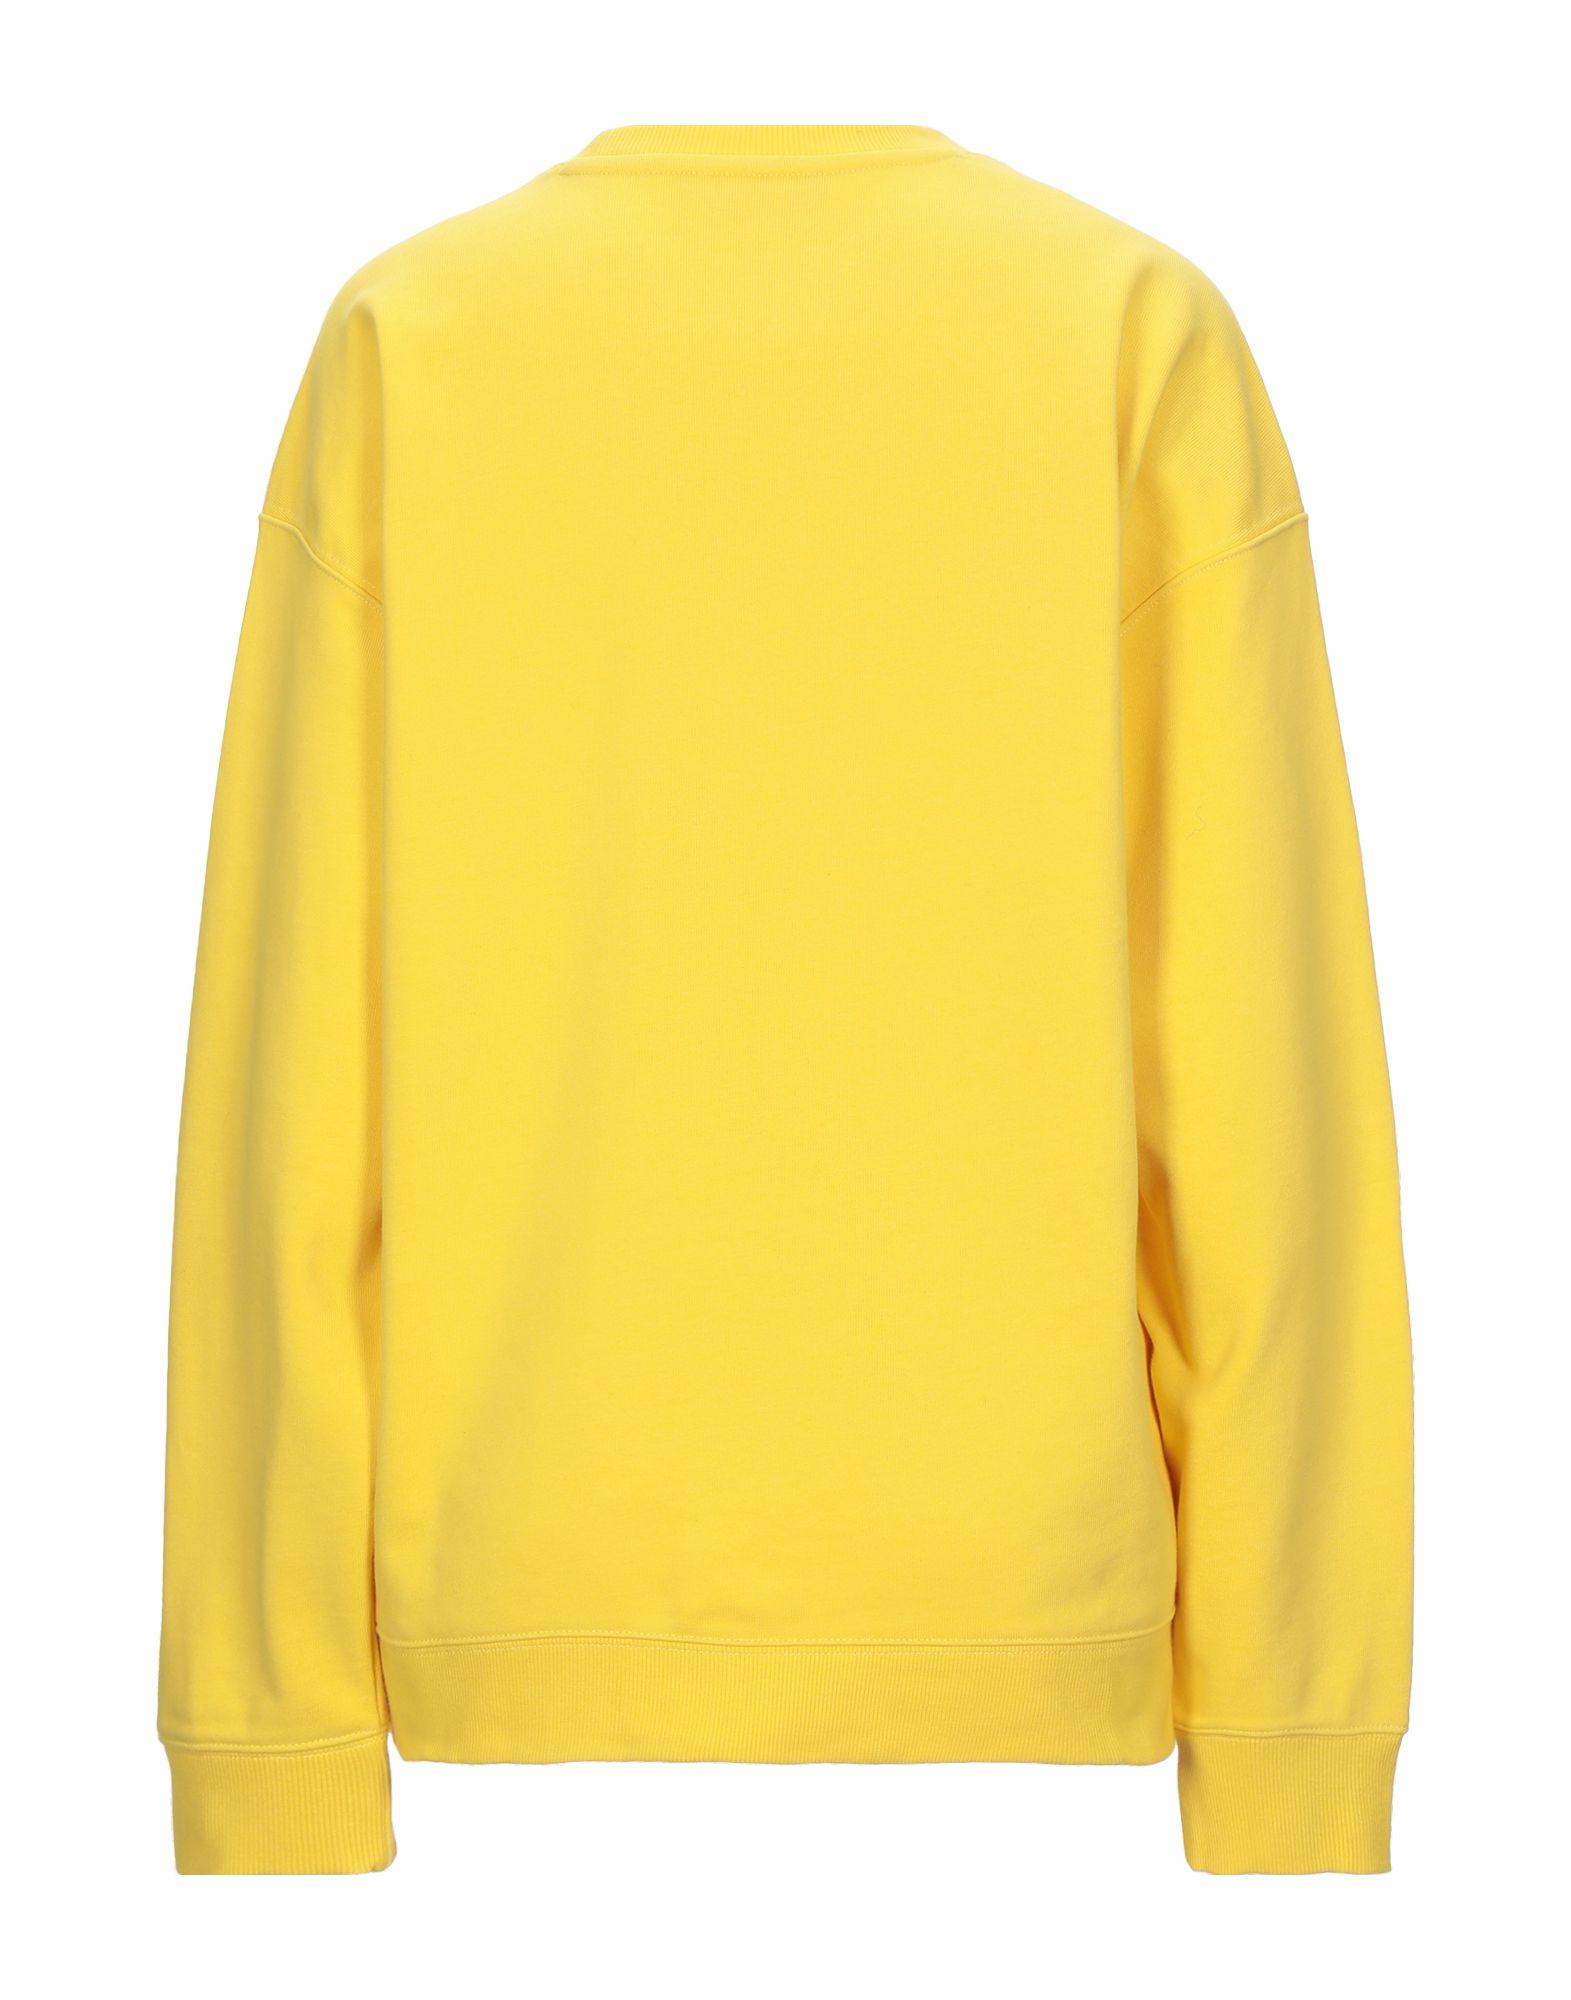 Carhartt Cotton Sweatshirt in Yellow - Lyst